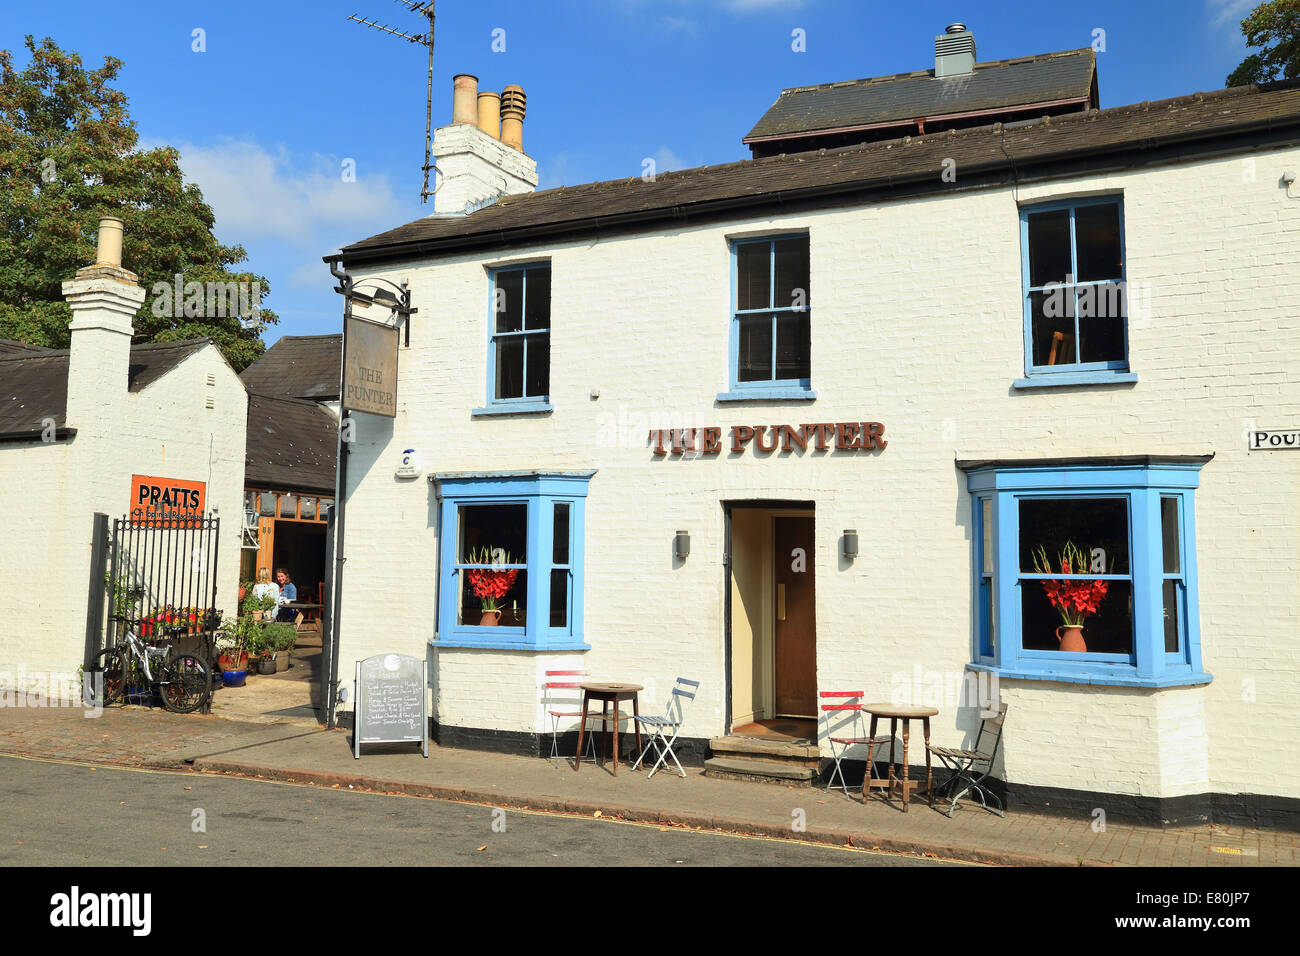 The Punter Pub, Cambridge, UK Stock Photo